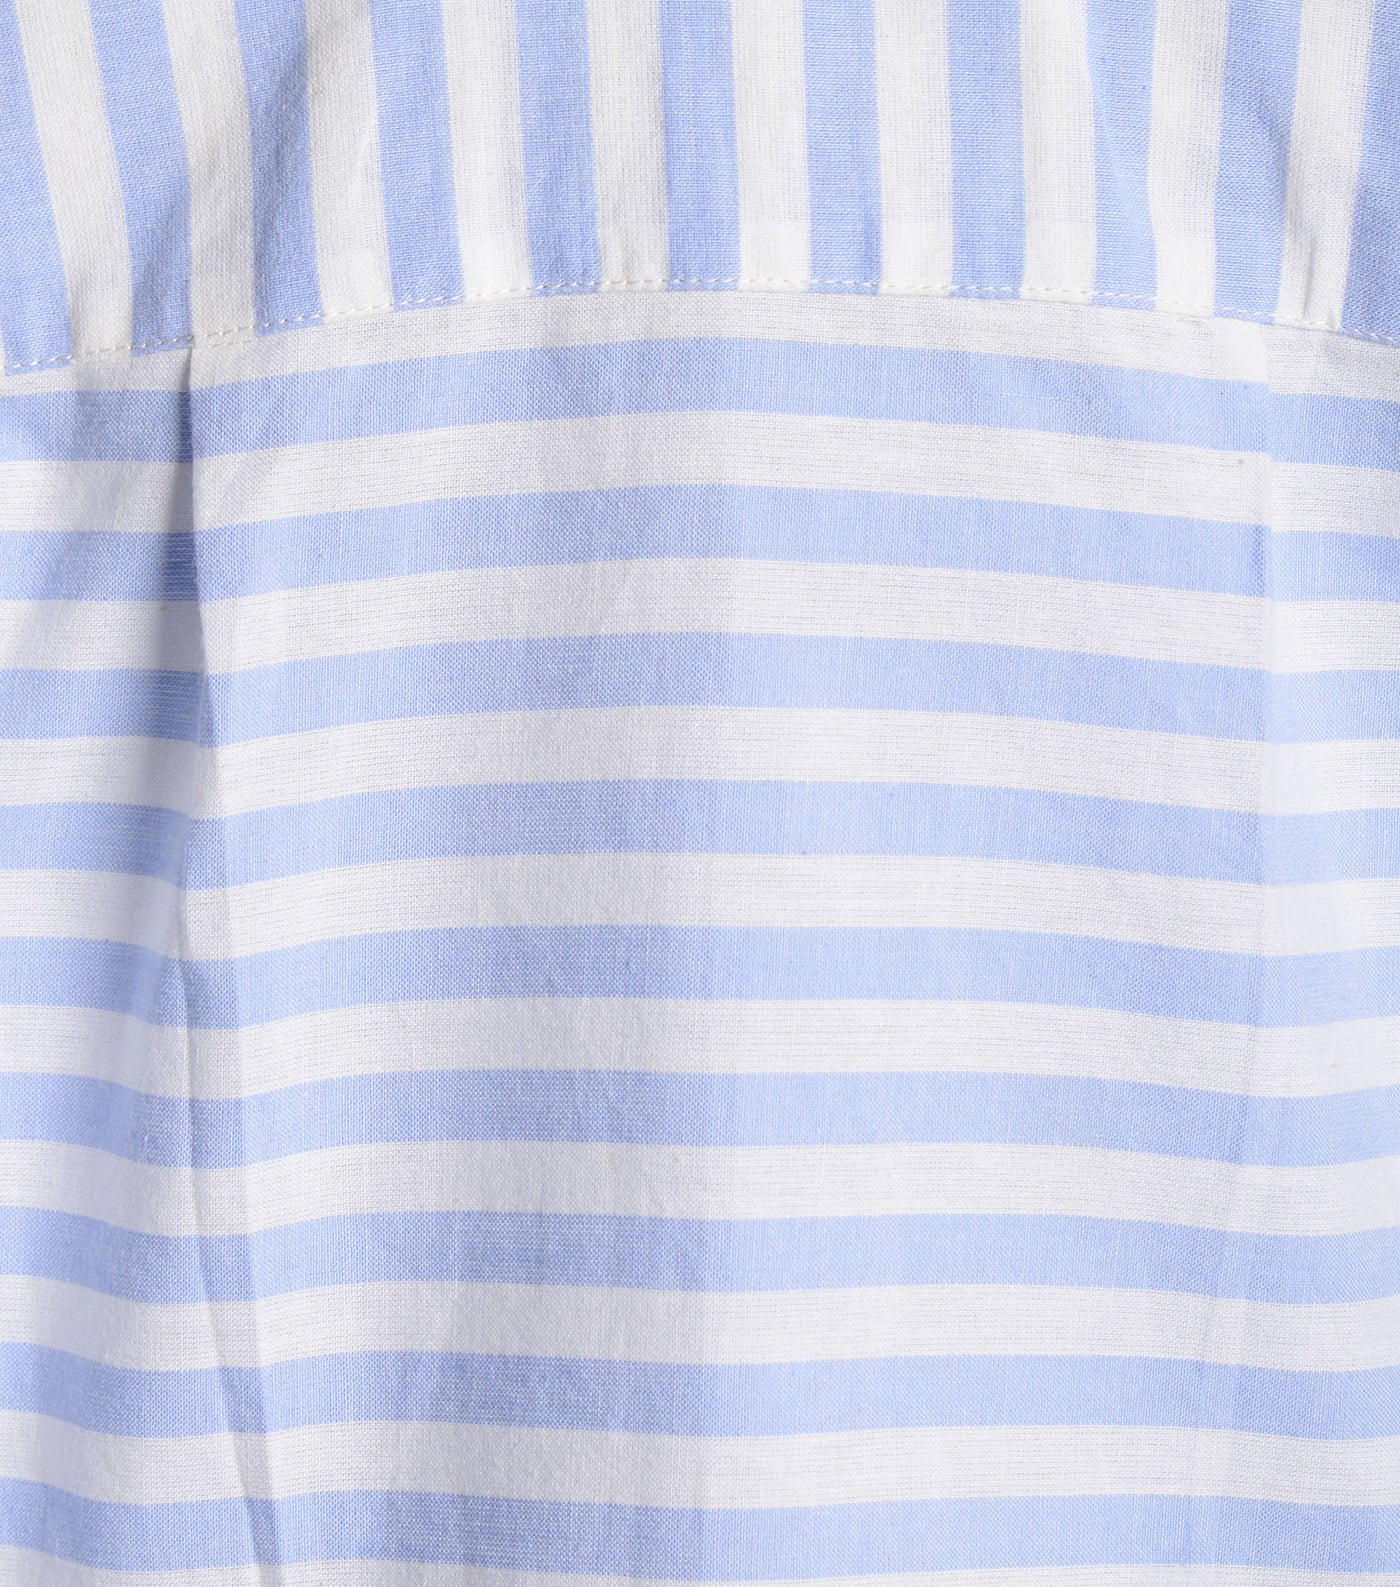 Blue Cotton Striped Shirt